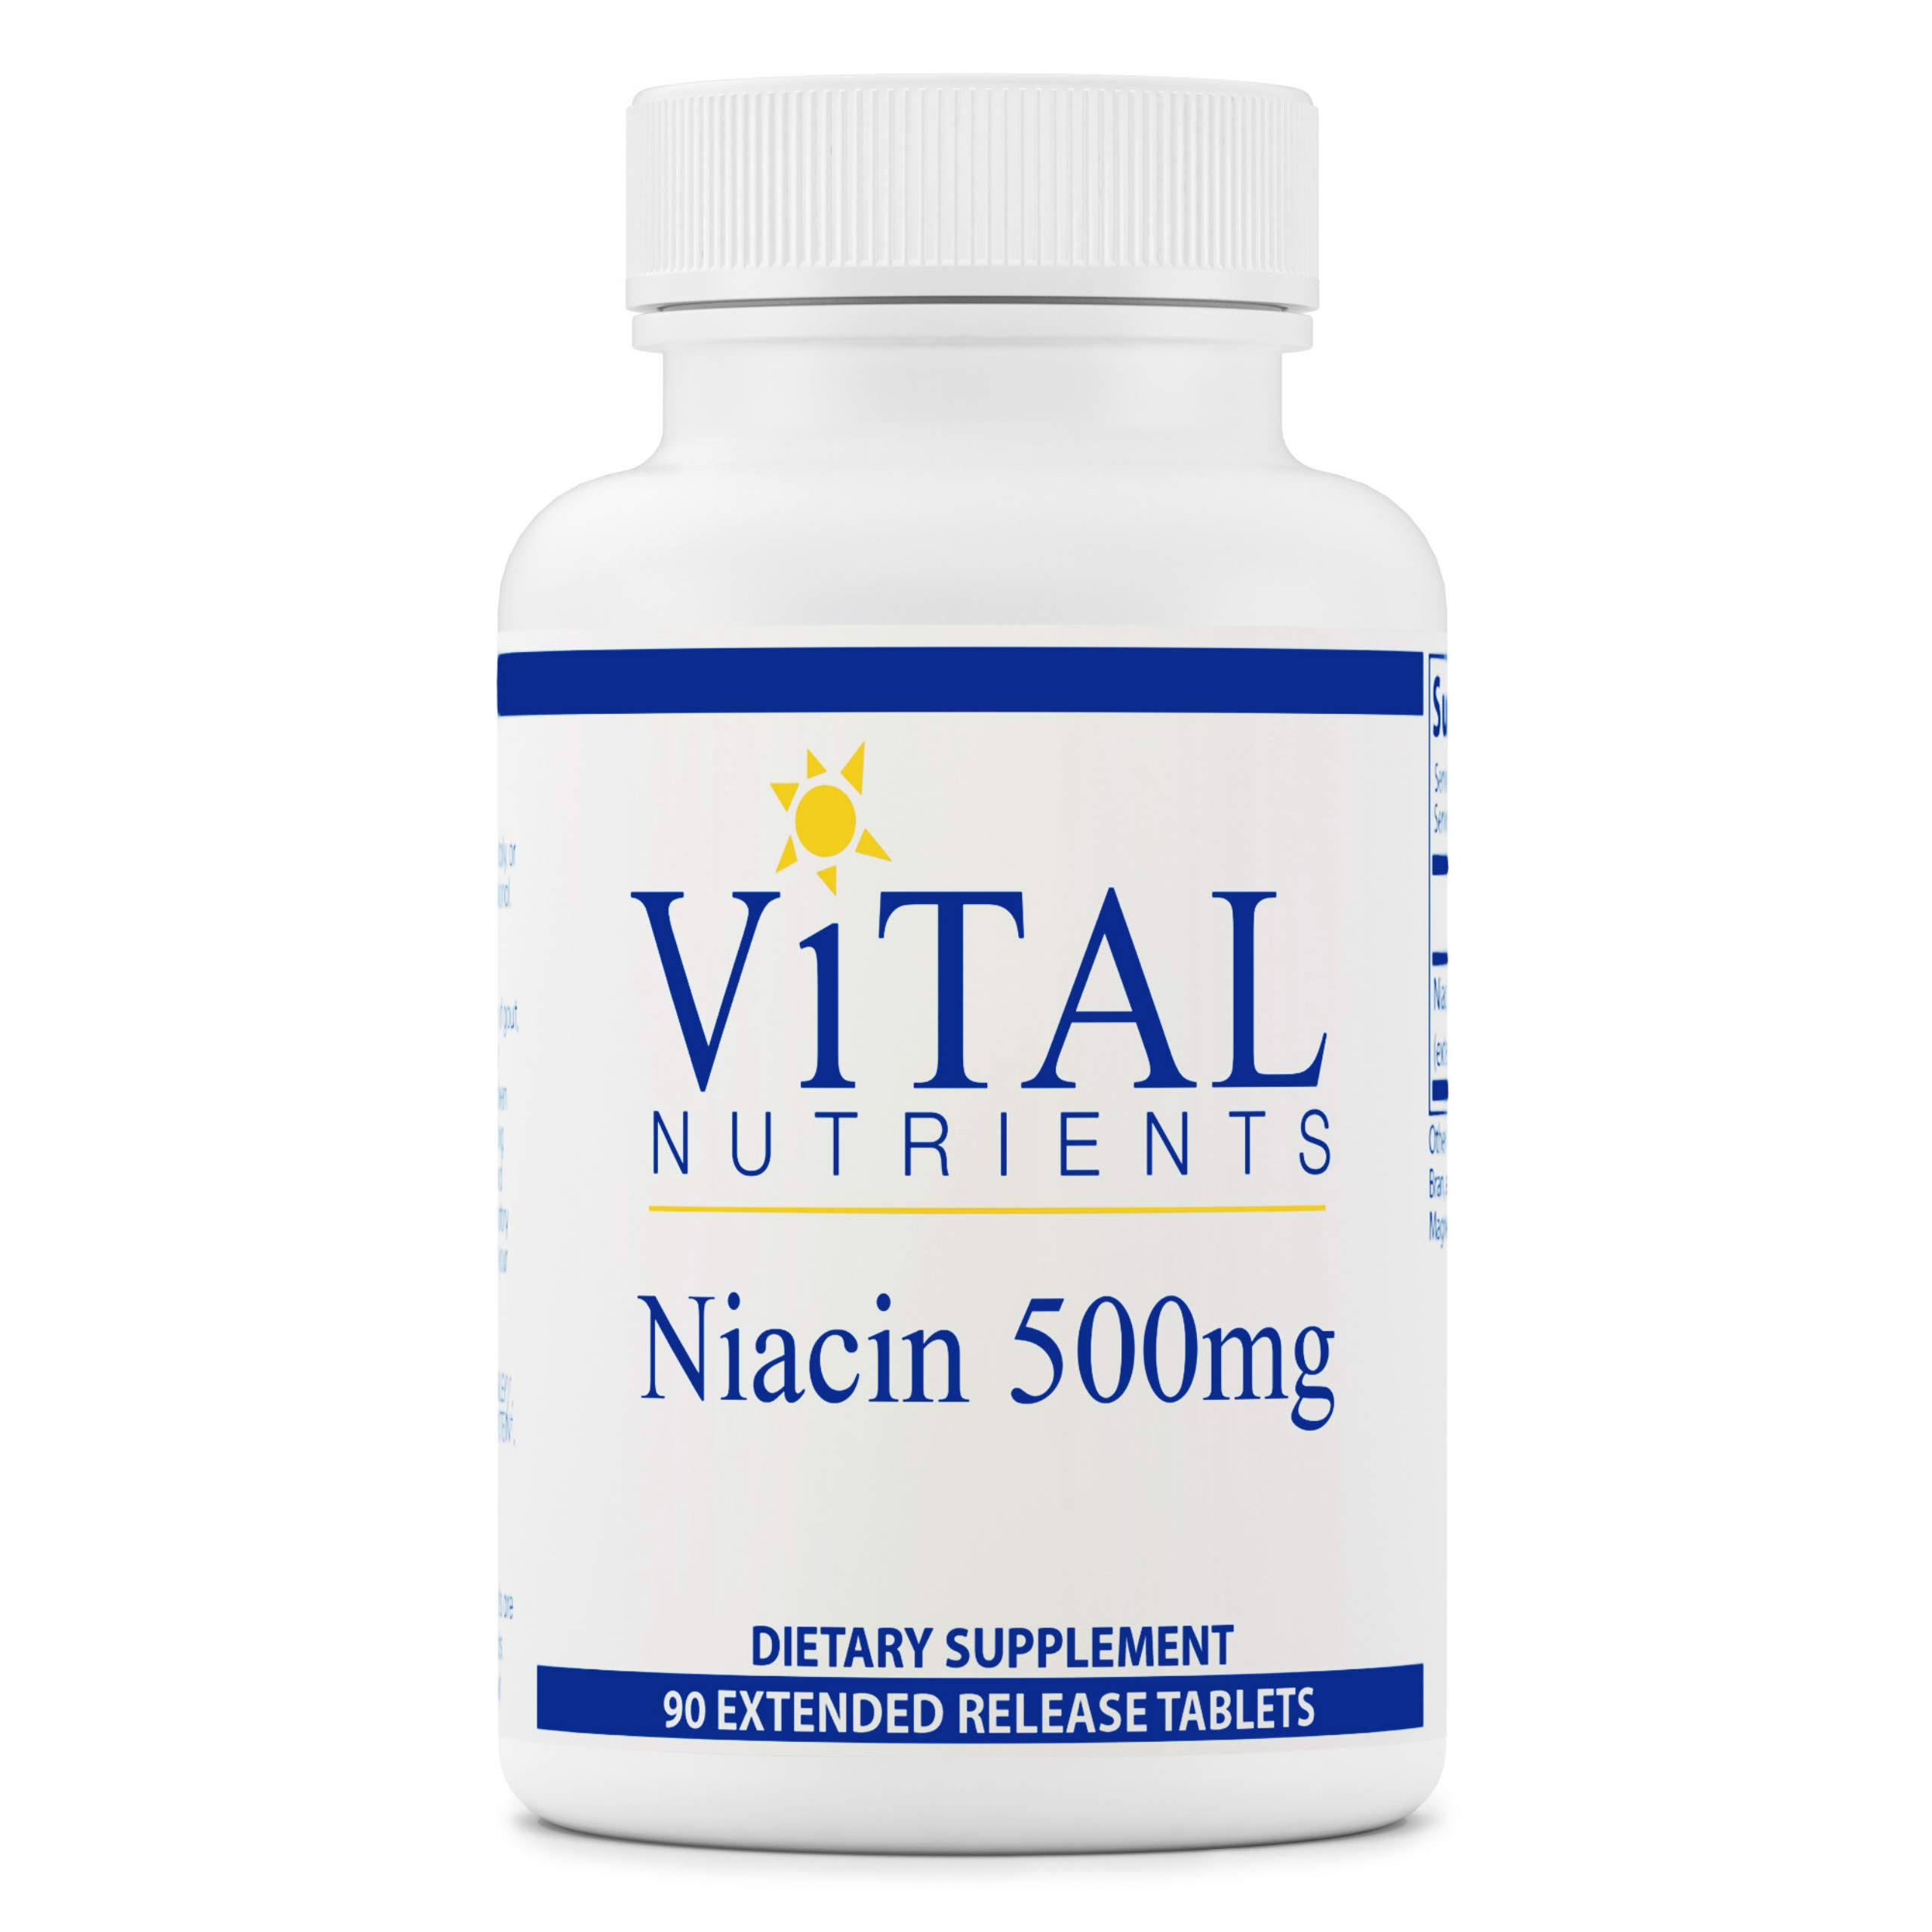 Vital Nutrients Niacin Dietary Supplement - 500mg, 90ct